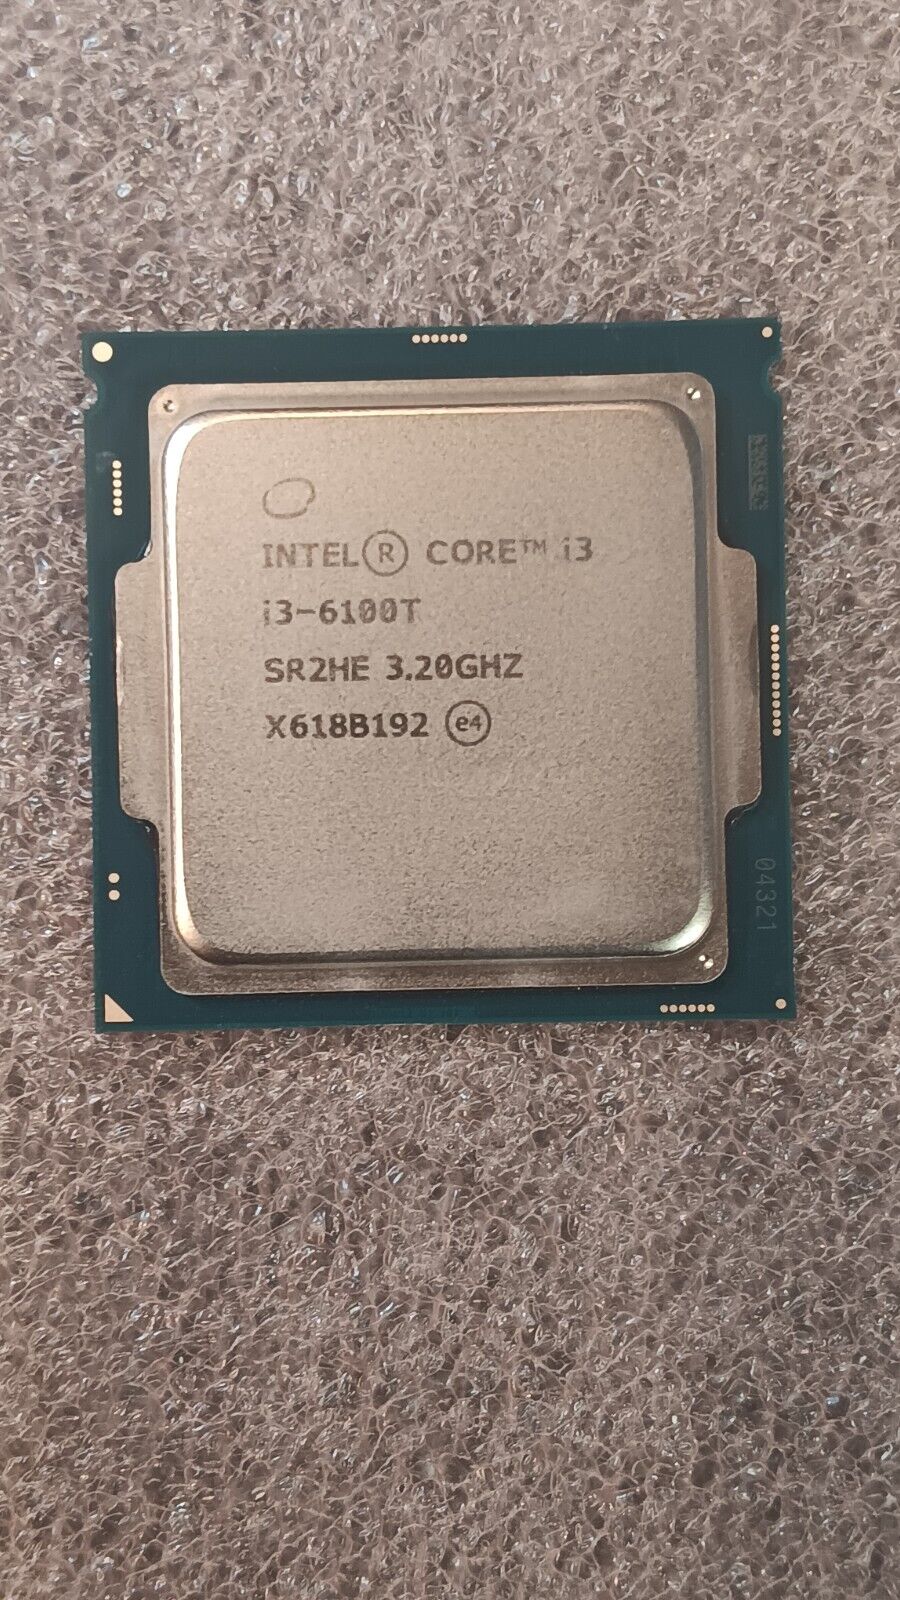 Intel Core i3-6100t SR2HE 3.2Ghz 35W 3 MB FCLGA1151 Desktop CPU Processor